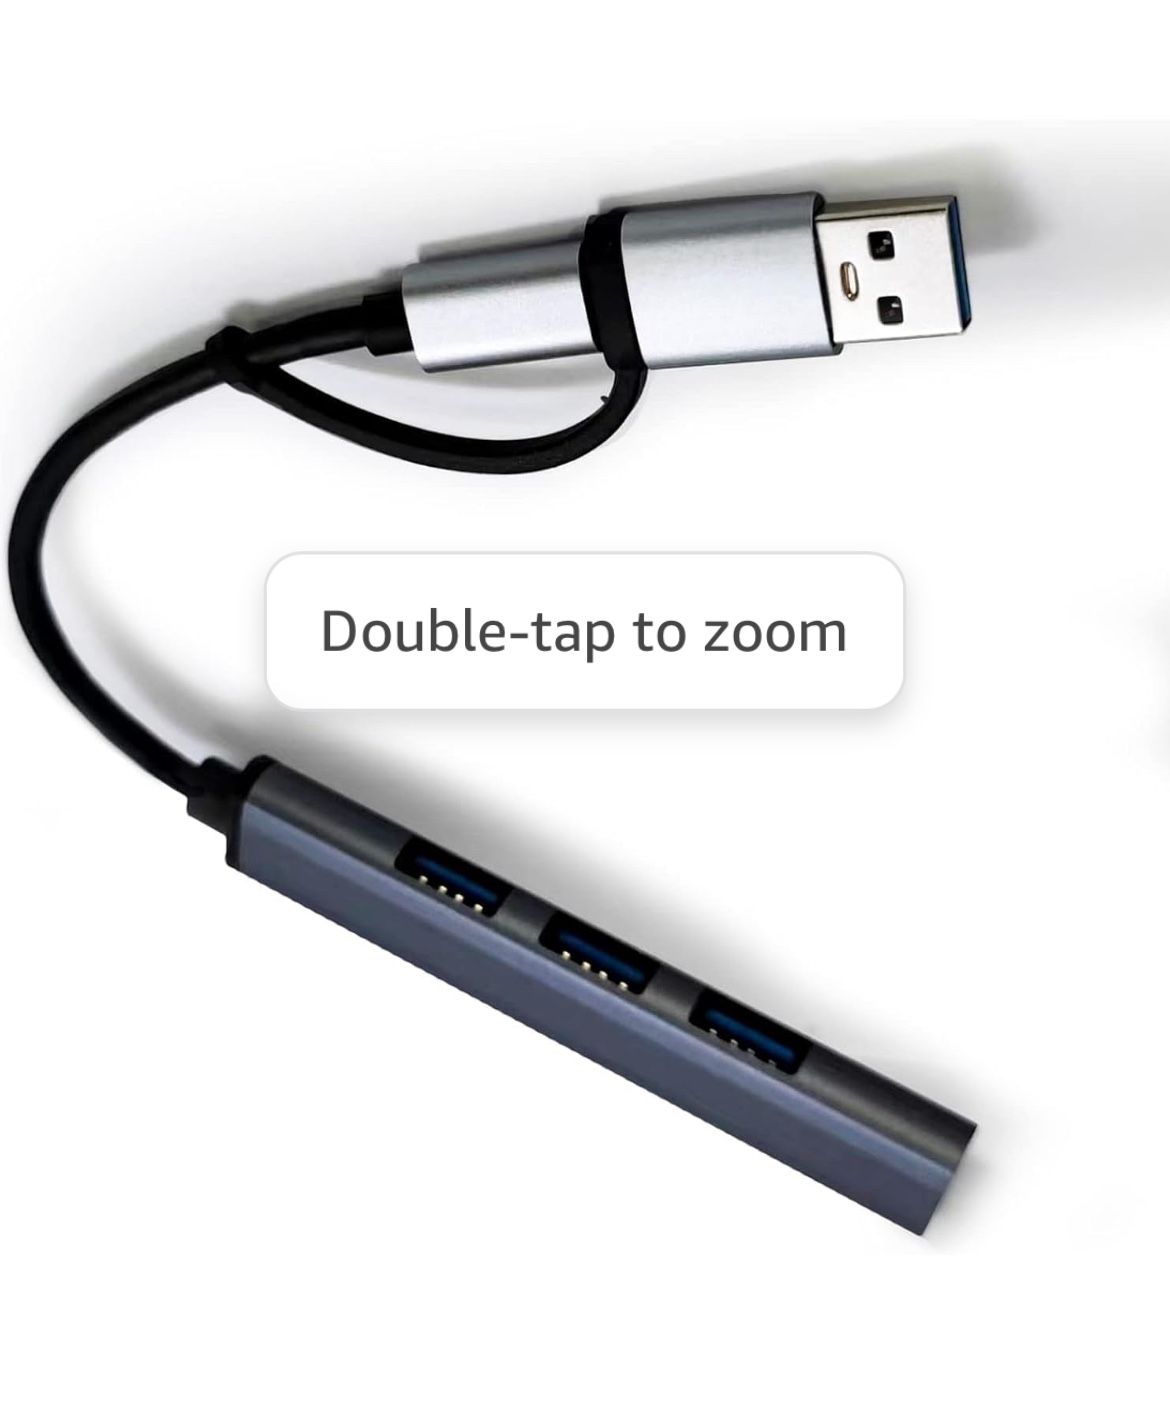  NUOLEI USB-C Hub, USB C to USB Adapter, 5V/3A USB C Splitter, USB Type C Hub for Laptop, PC, MacBook, Chromebook and More USB Type C Dev